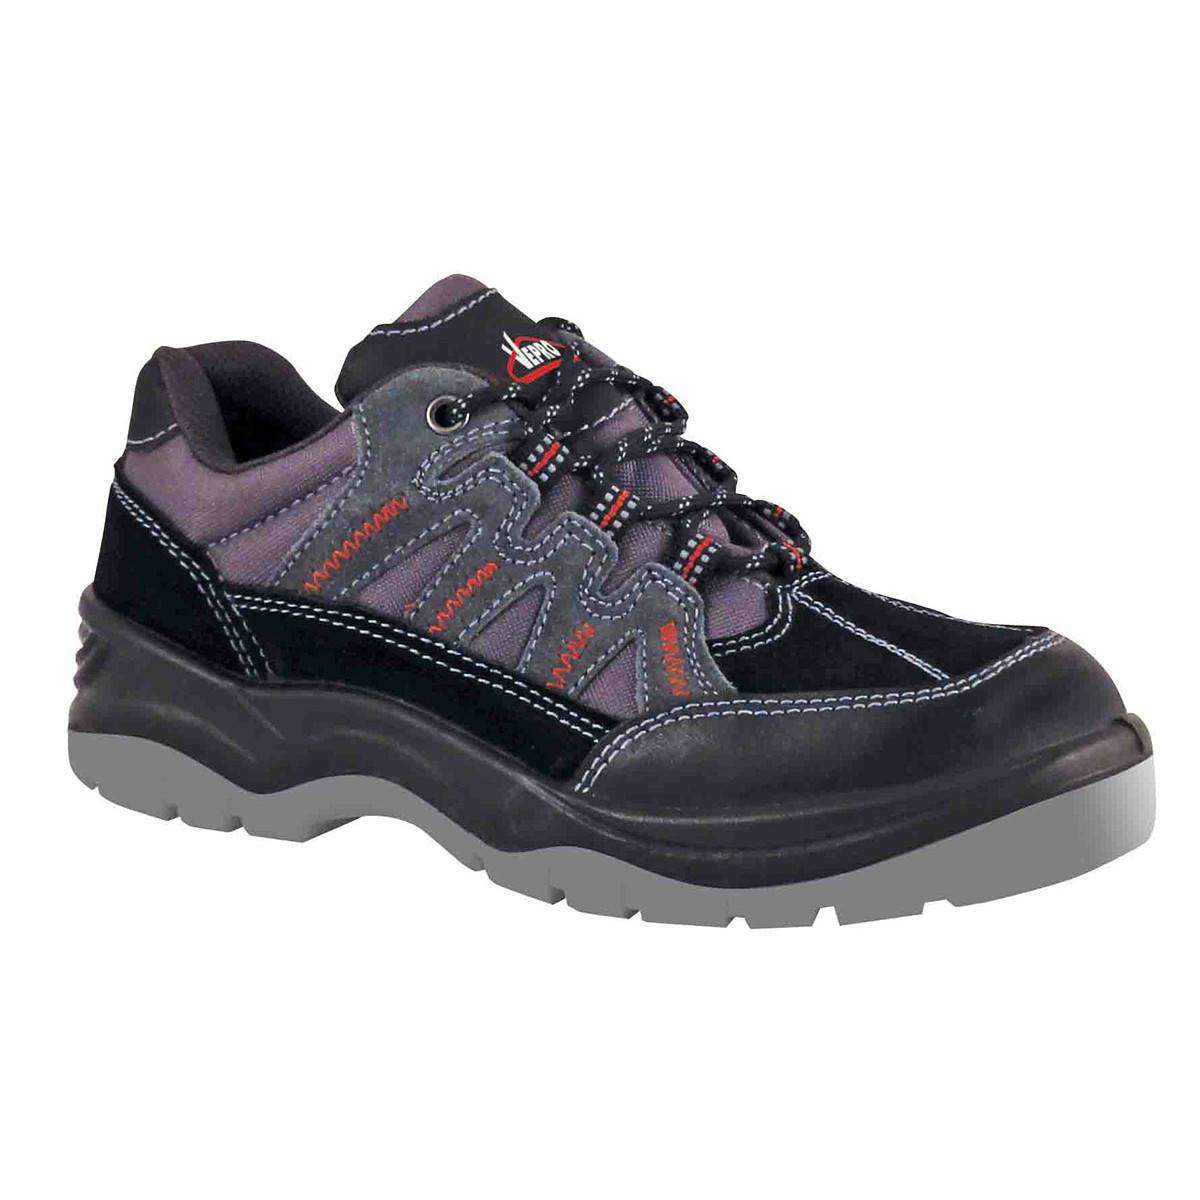 SPA safety shoes size 44, grey-black